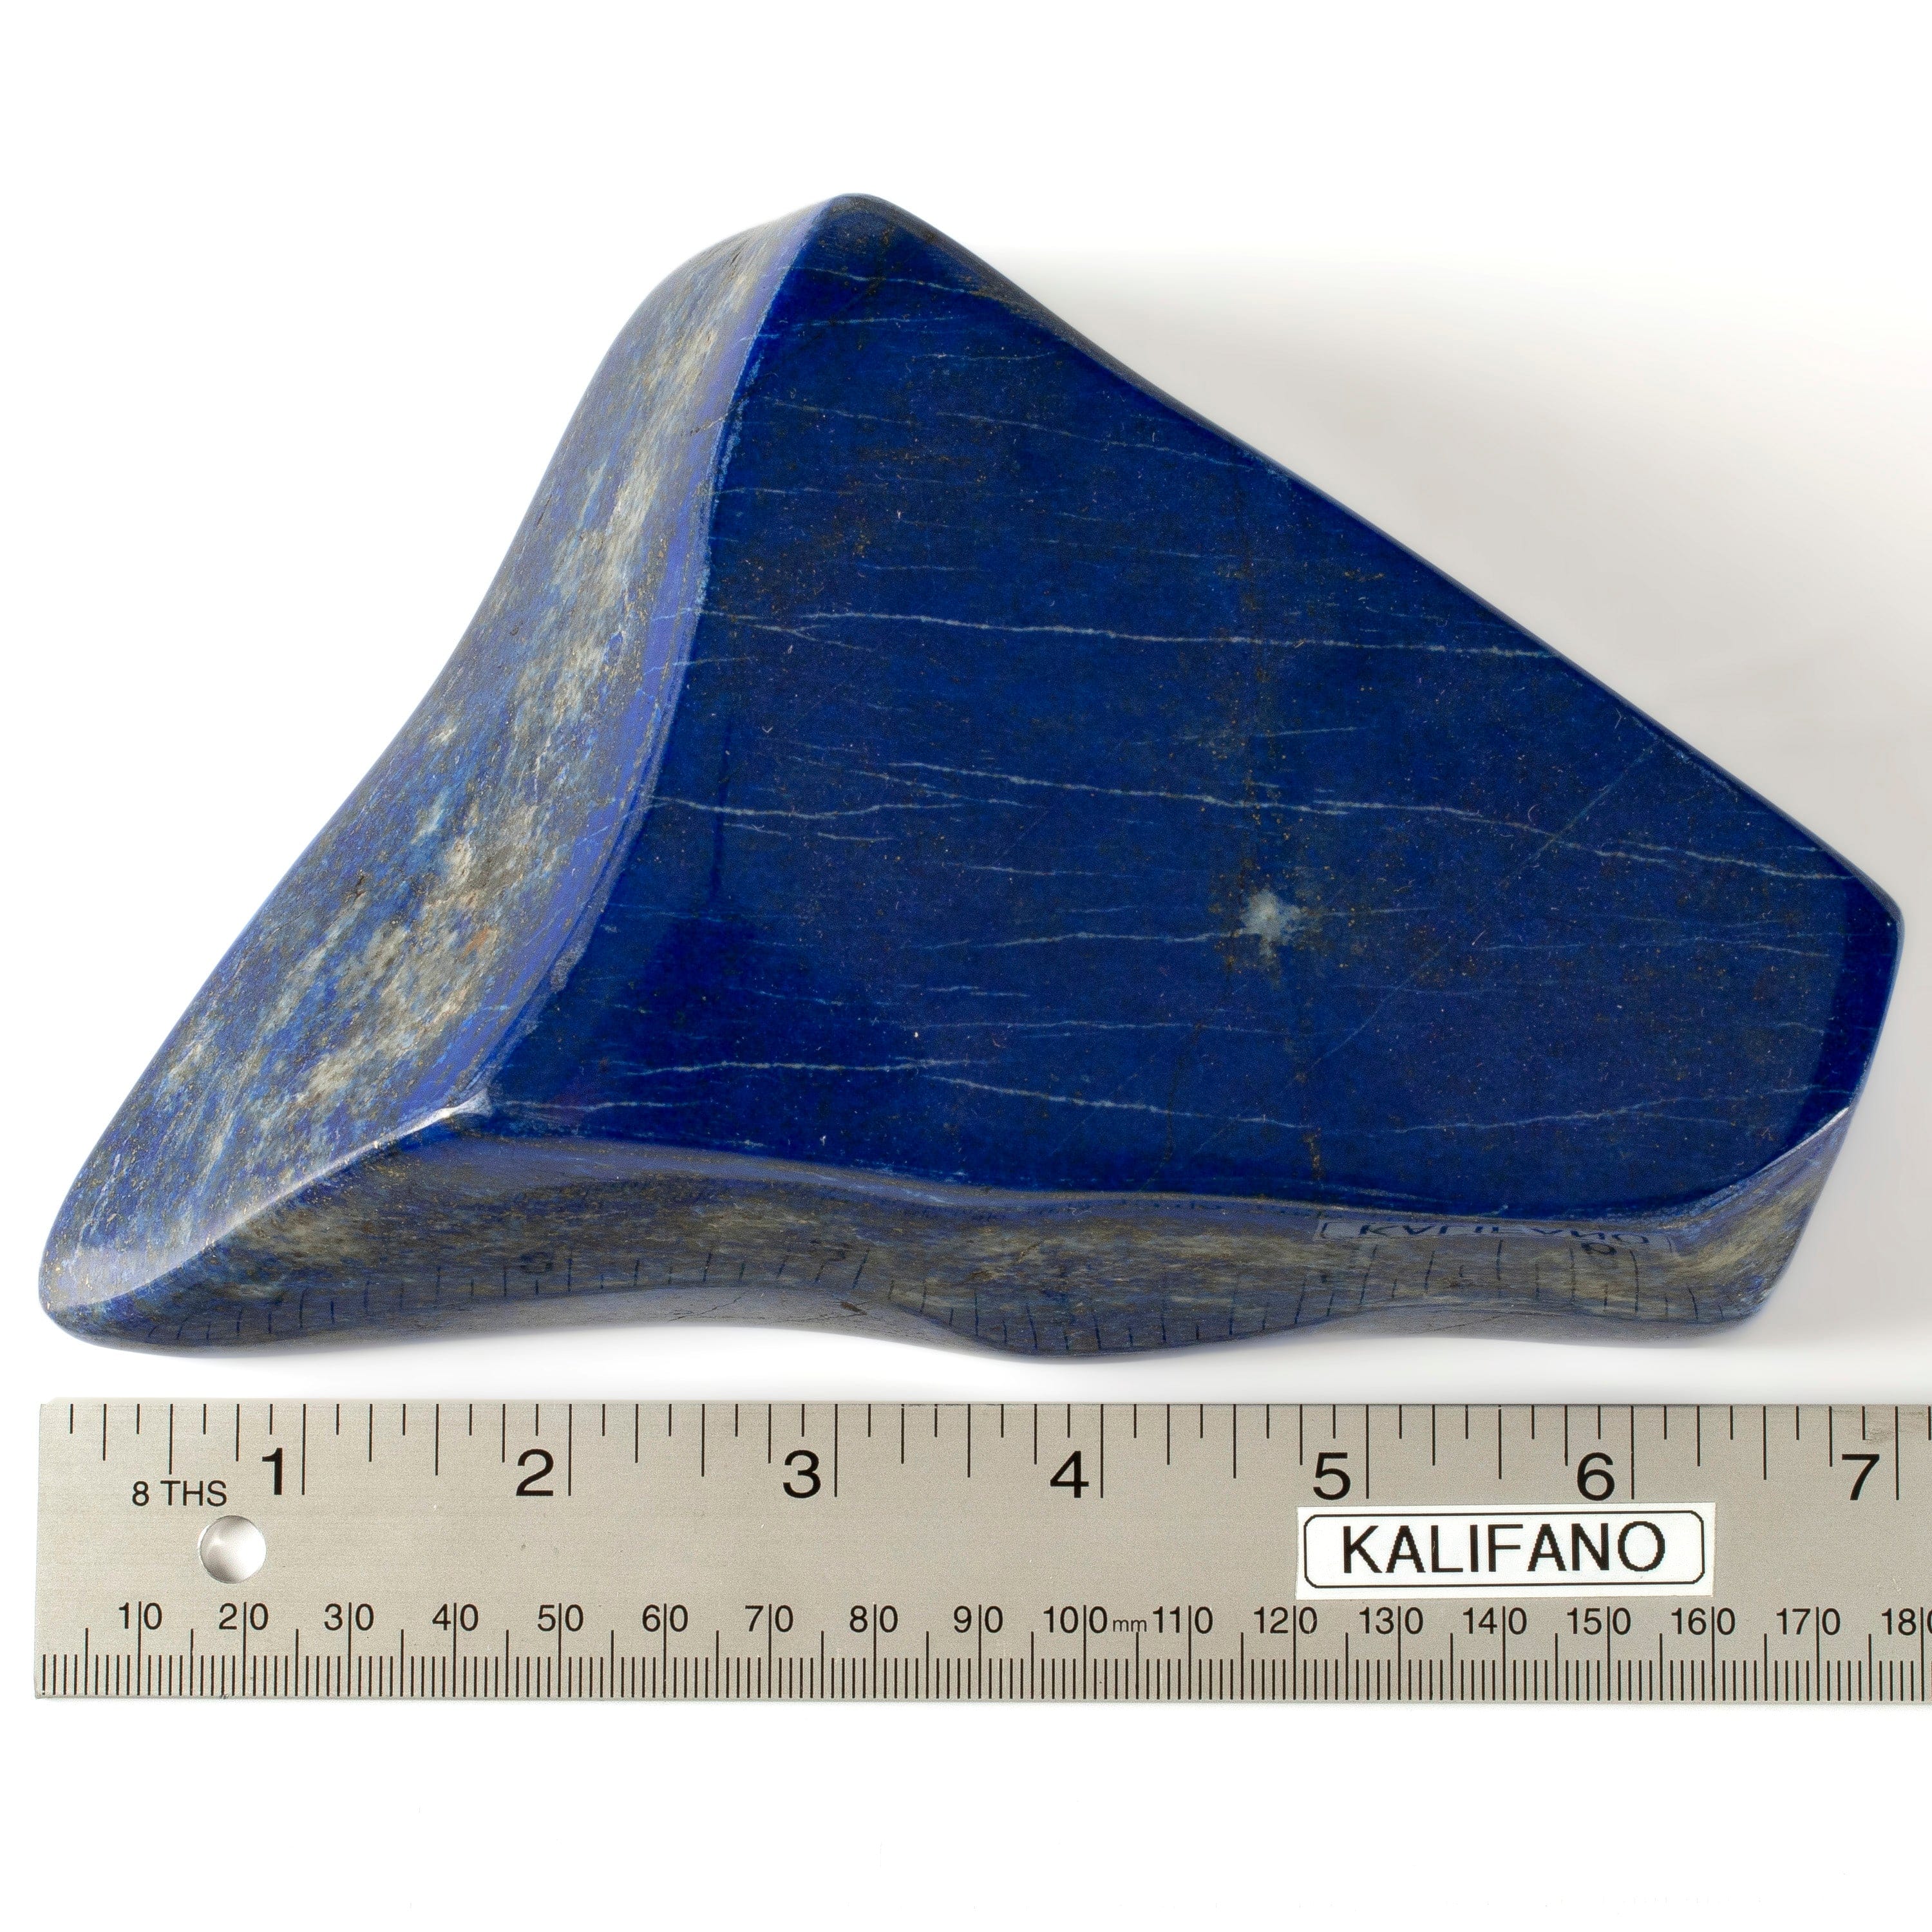 Kalifano Lapis Lapis Lazuli Freeform from Afghanistan - 6" / 1,580 grams LP1600.004